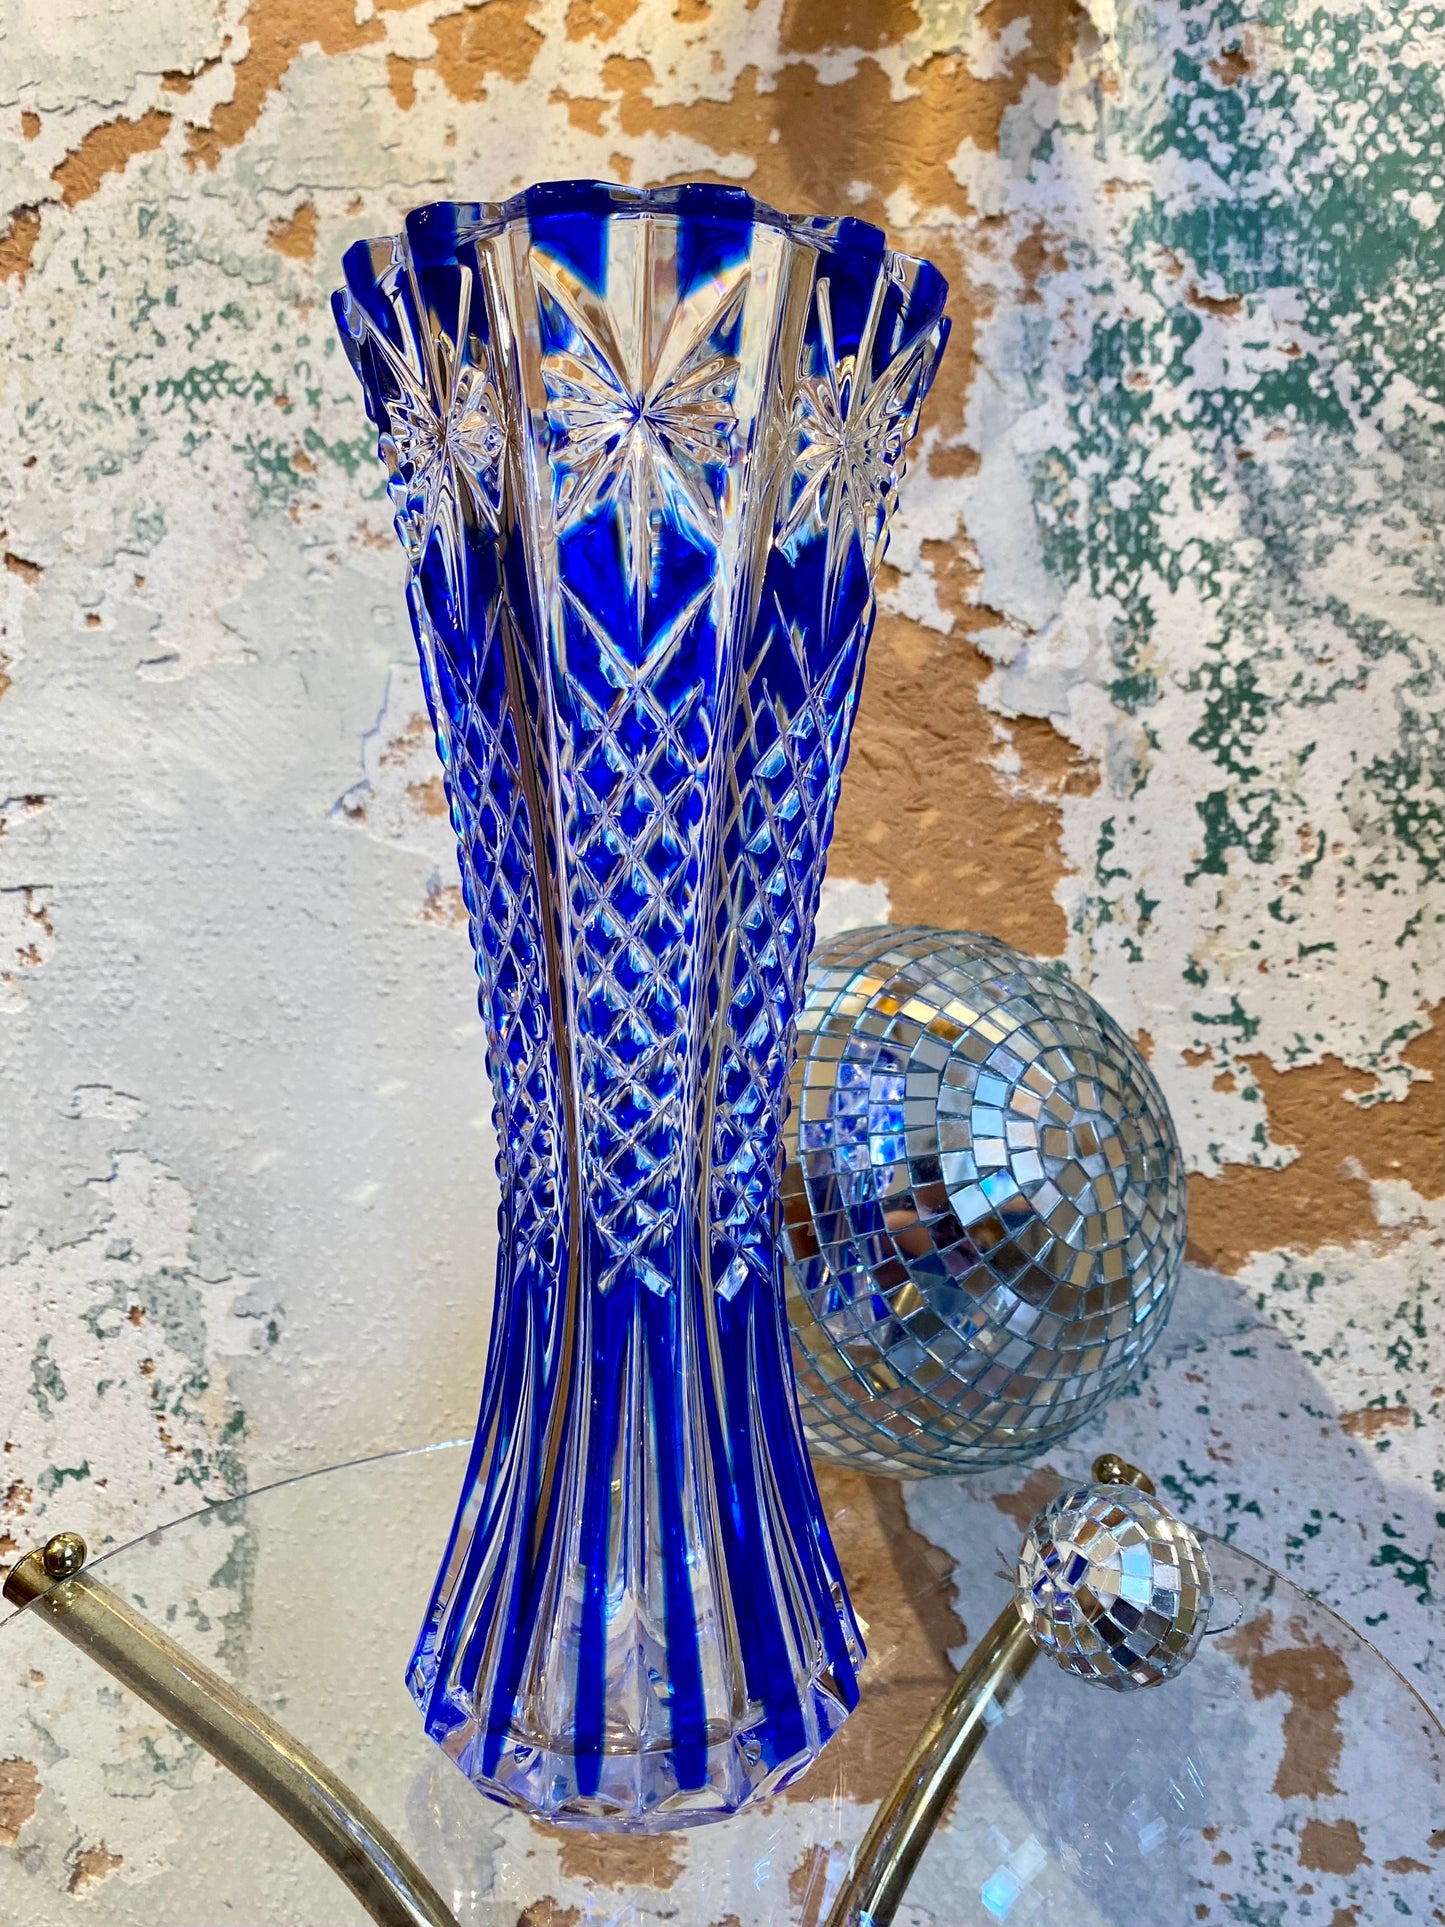 Vase bleu polonais cristal doublé